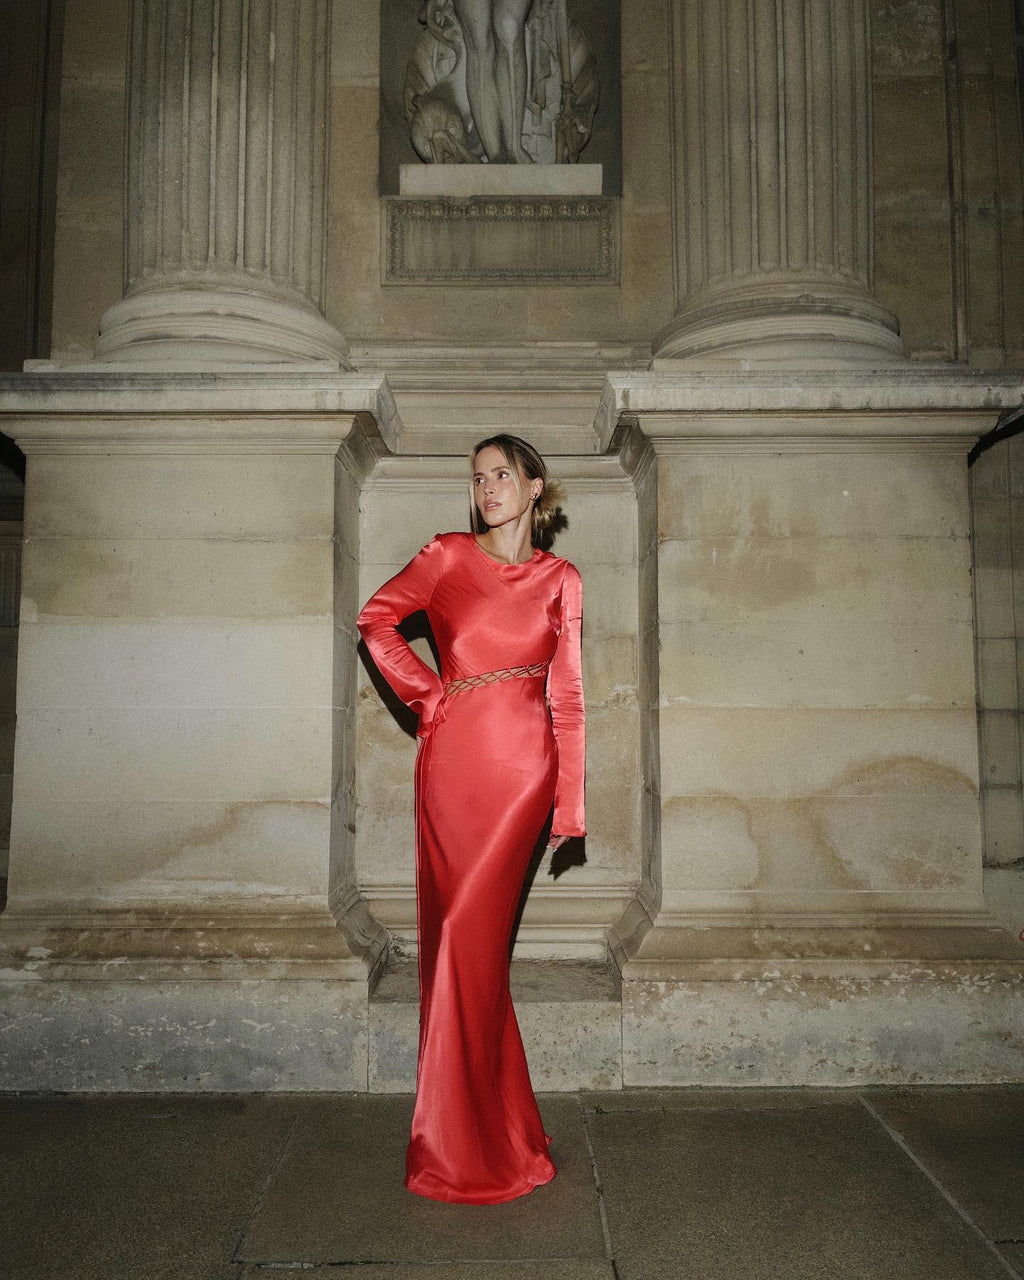 Shona Joy -  Lydie Asymmetrical Lace Up Dress - Poppy Red